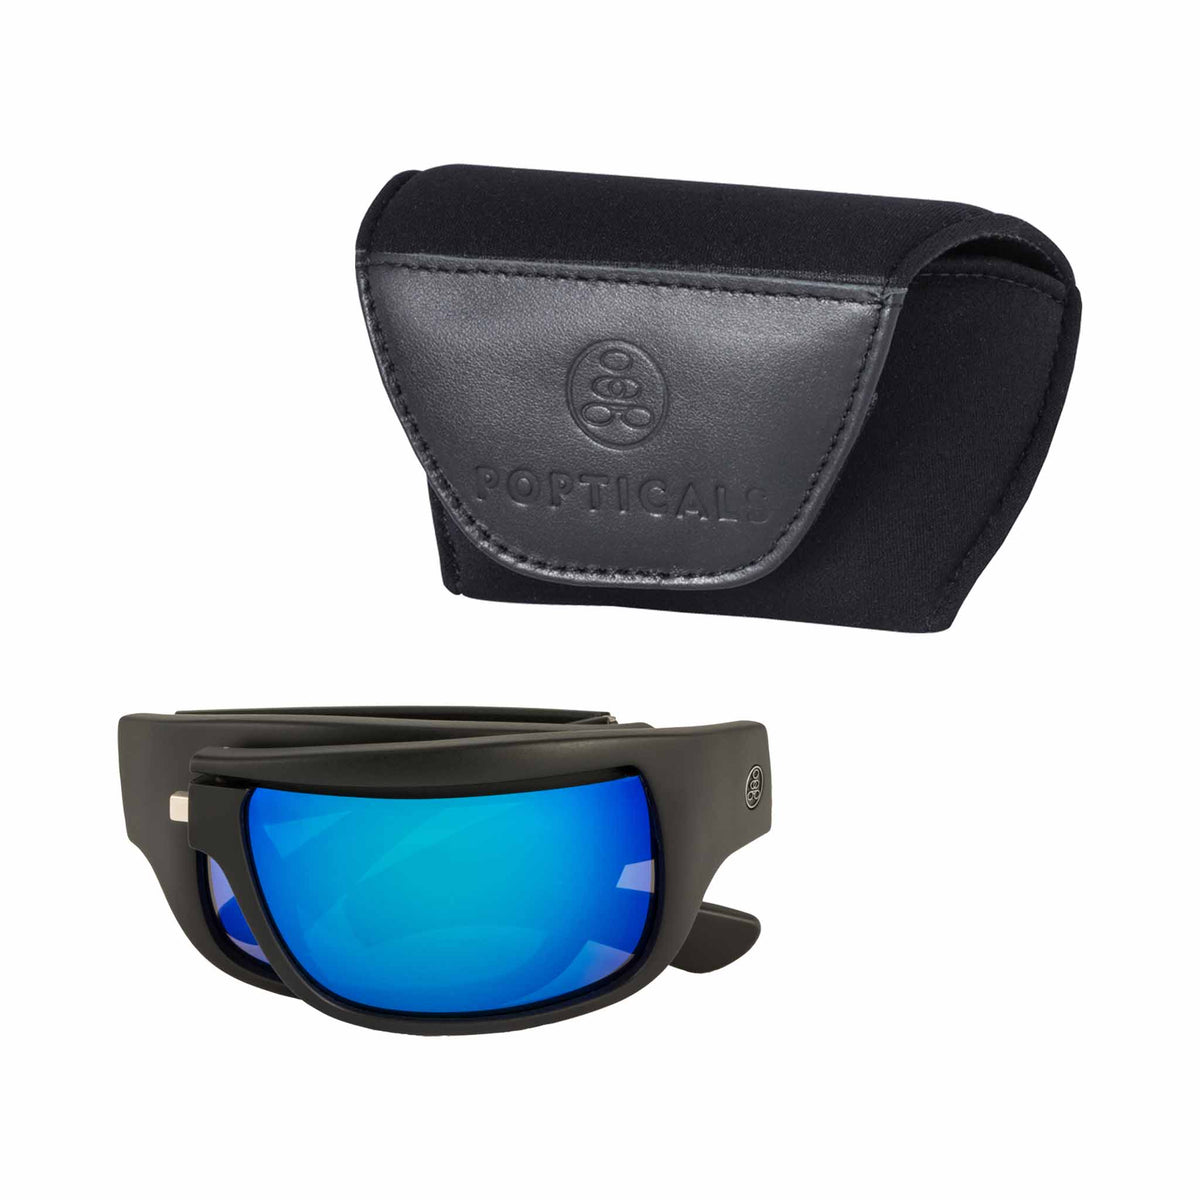 Popticals, Premium Compact Sunglasses, PopH2O, 010070-BMUN, Polarized Sunglasses, Matte Black Frame, Gray Lenses w/Blue Mirror Finish, Case View